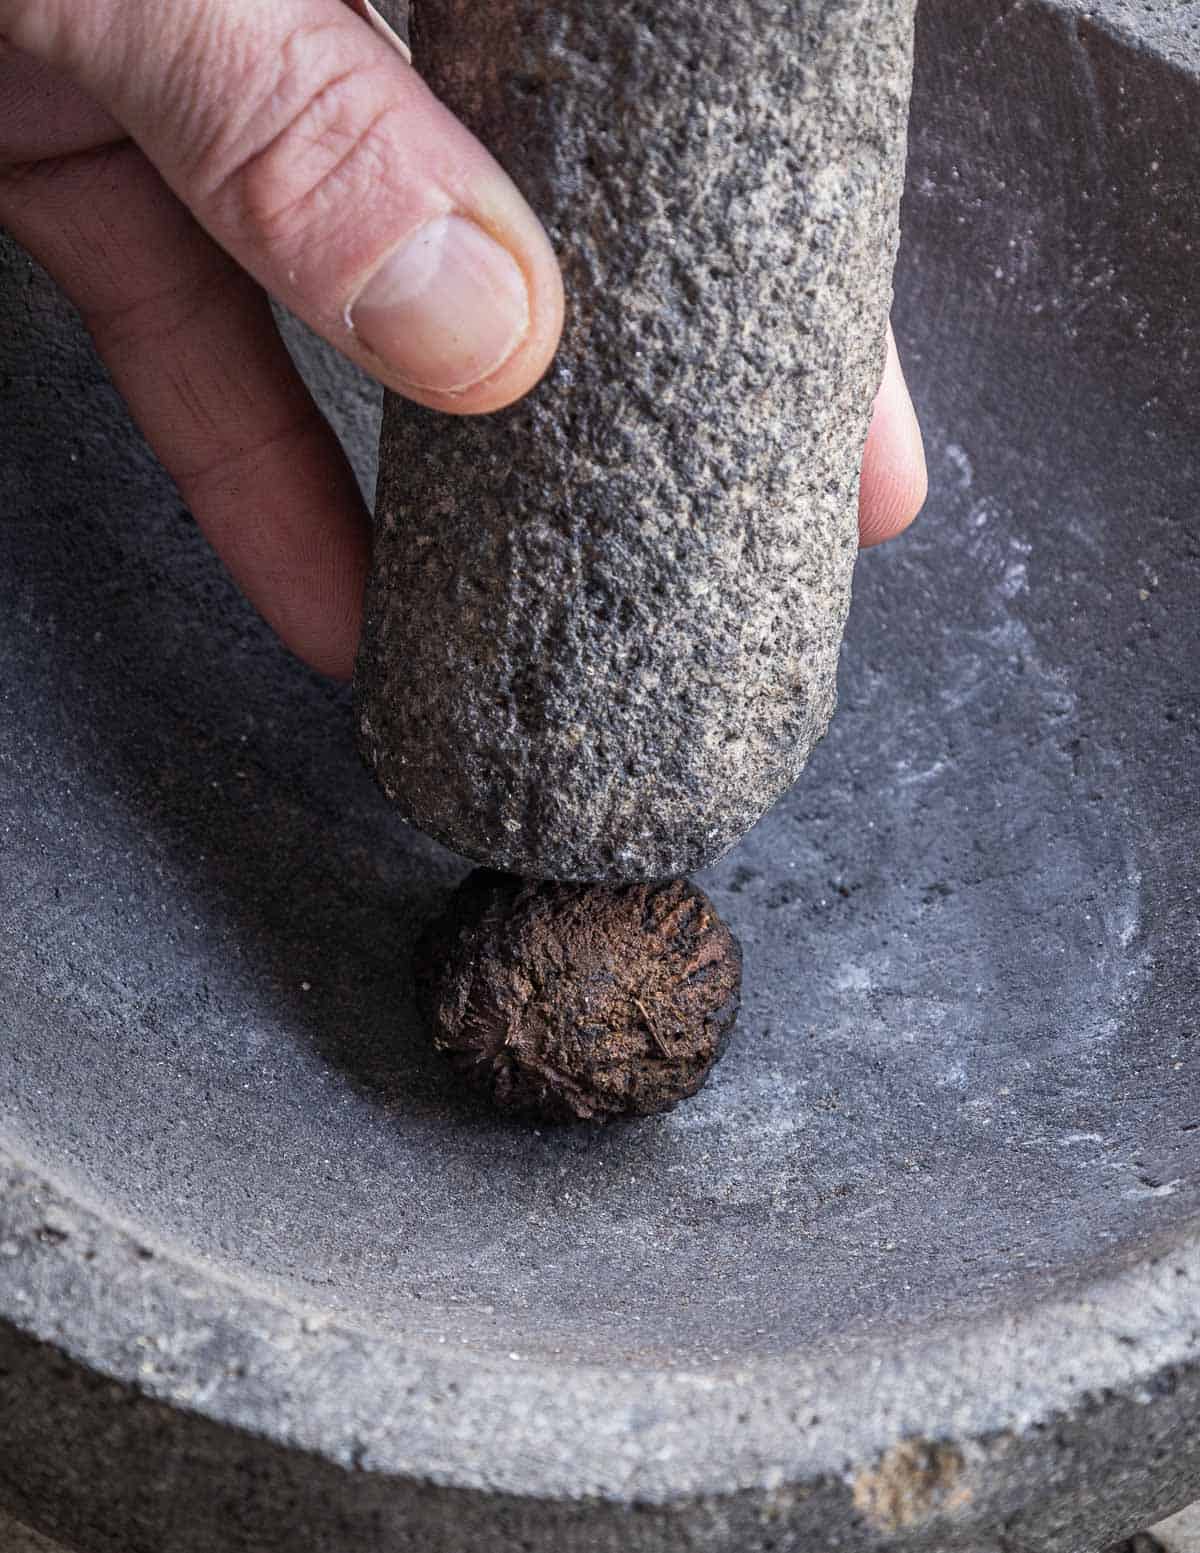 Cracking a black walnut by hand. 